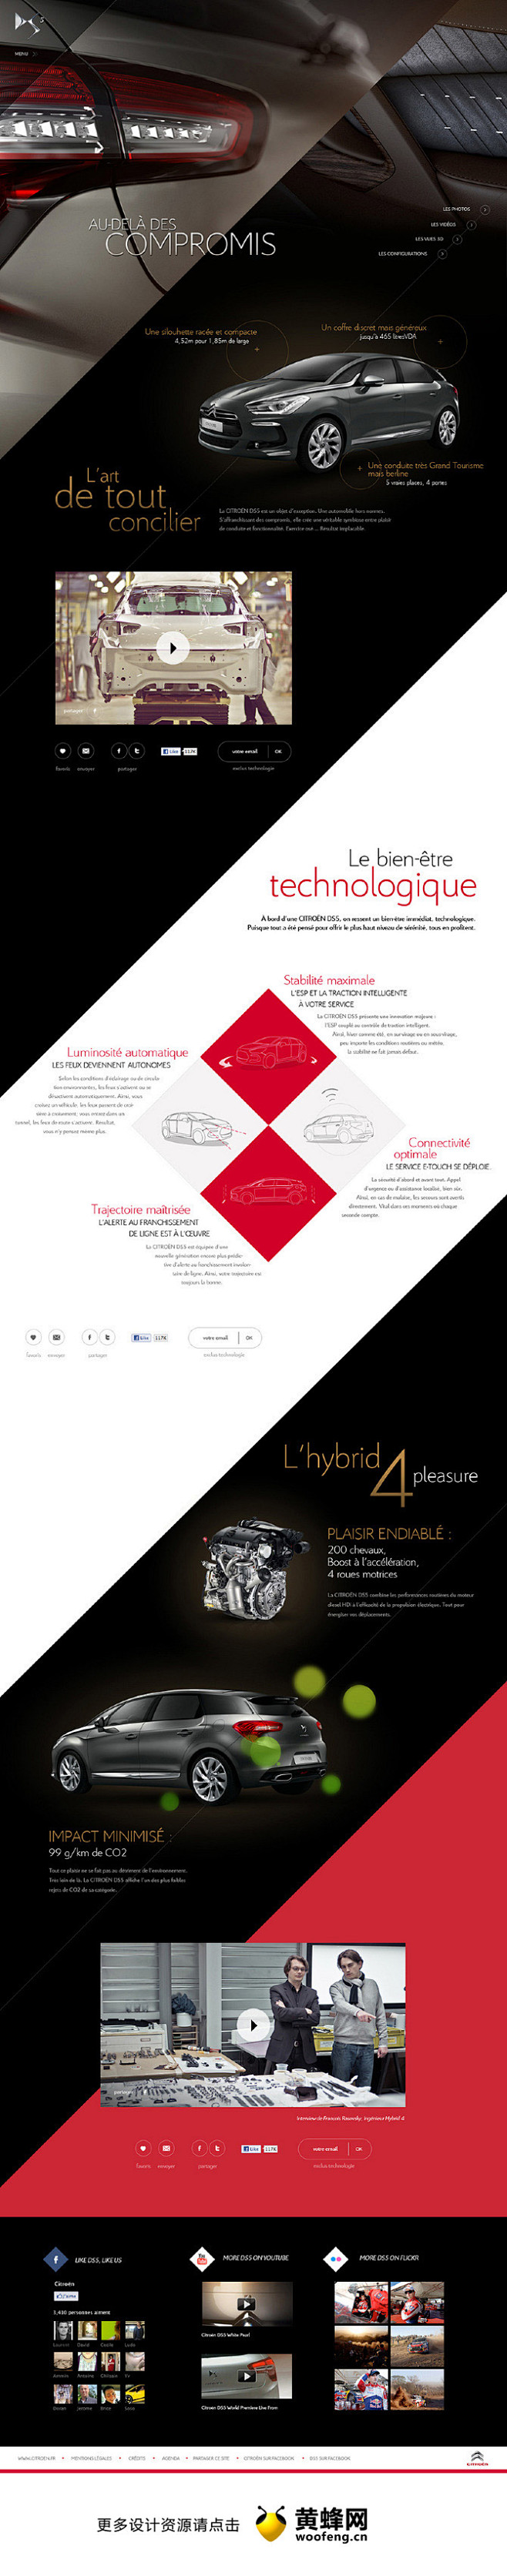 Citroen DS5汽车网站设计截屏 ...